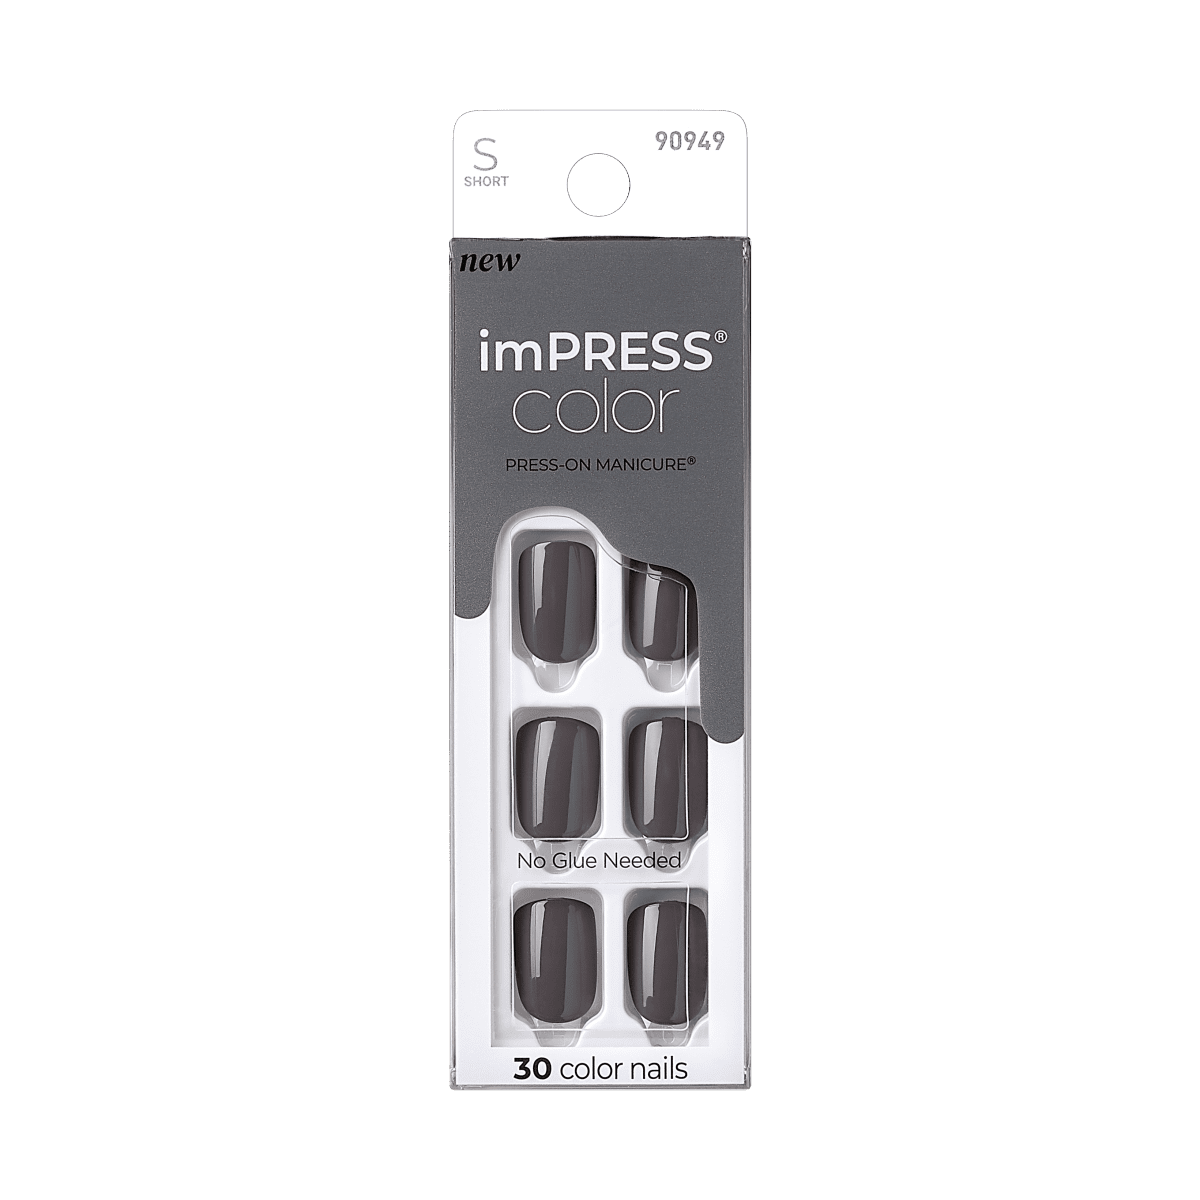 imPRESS Color Press-On Nails - Concrete Jungle